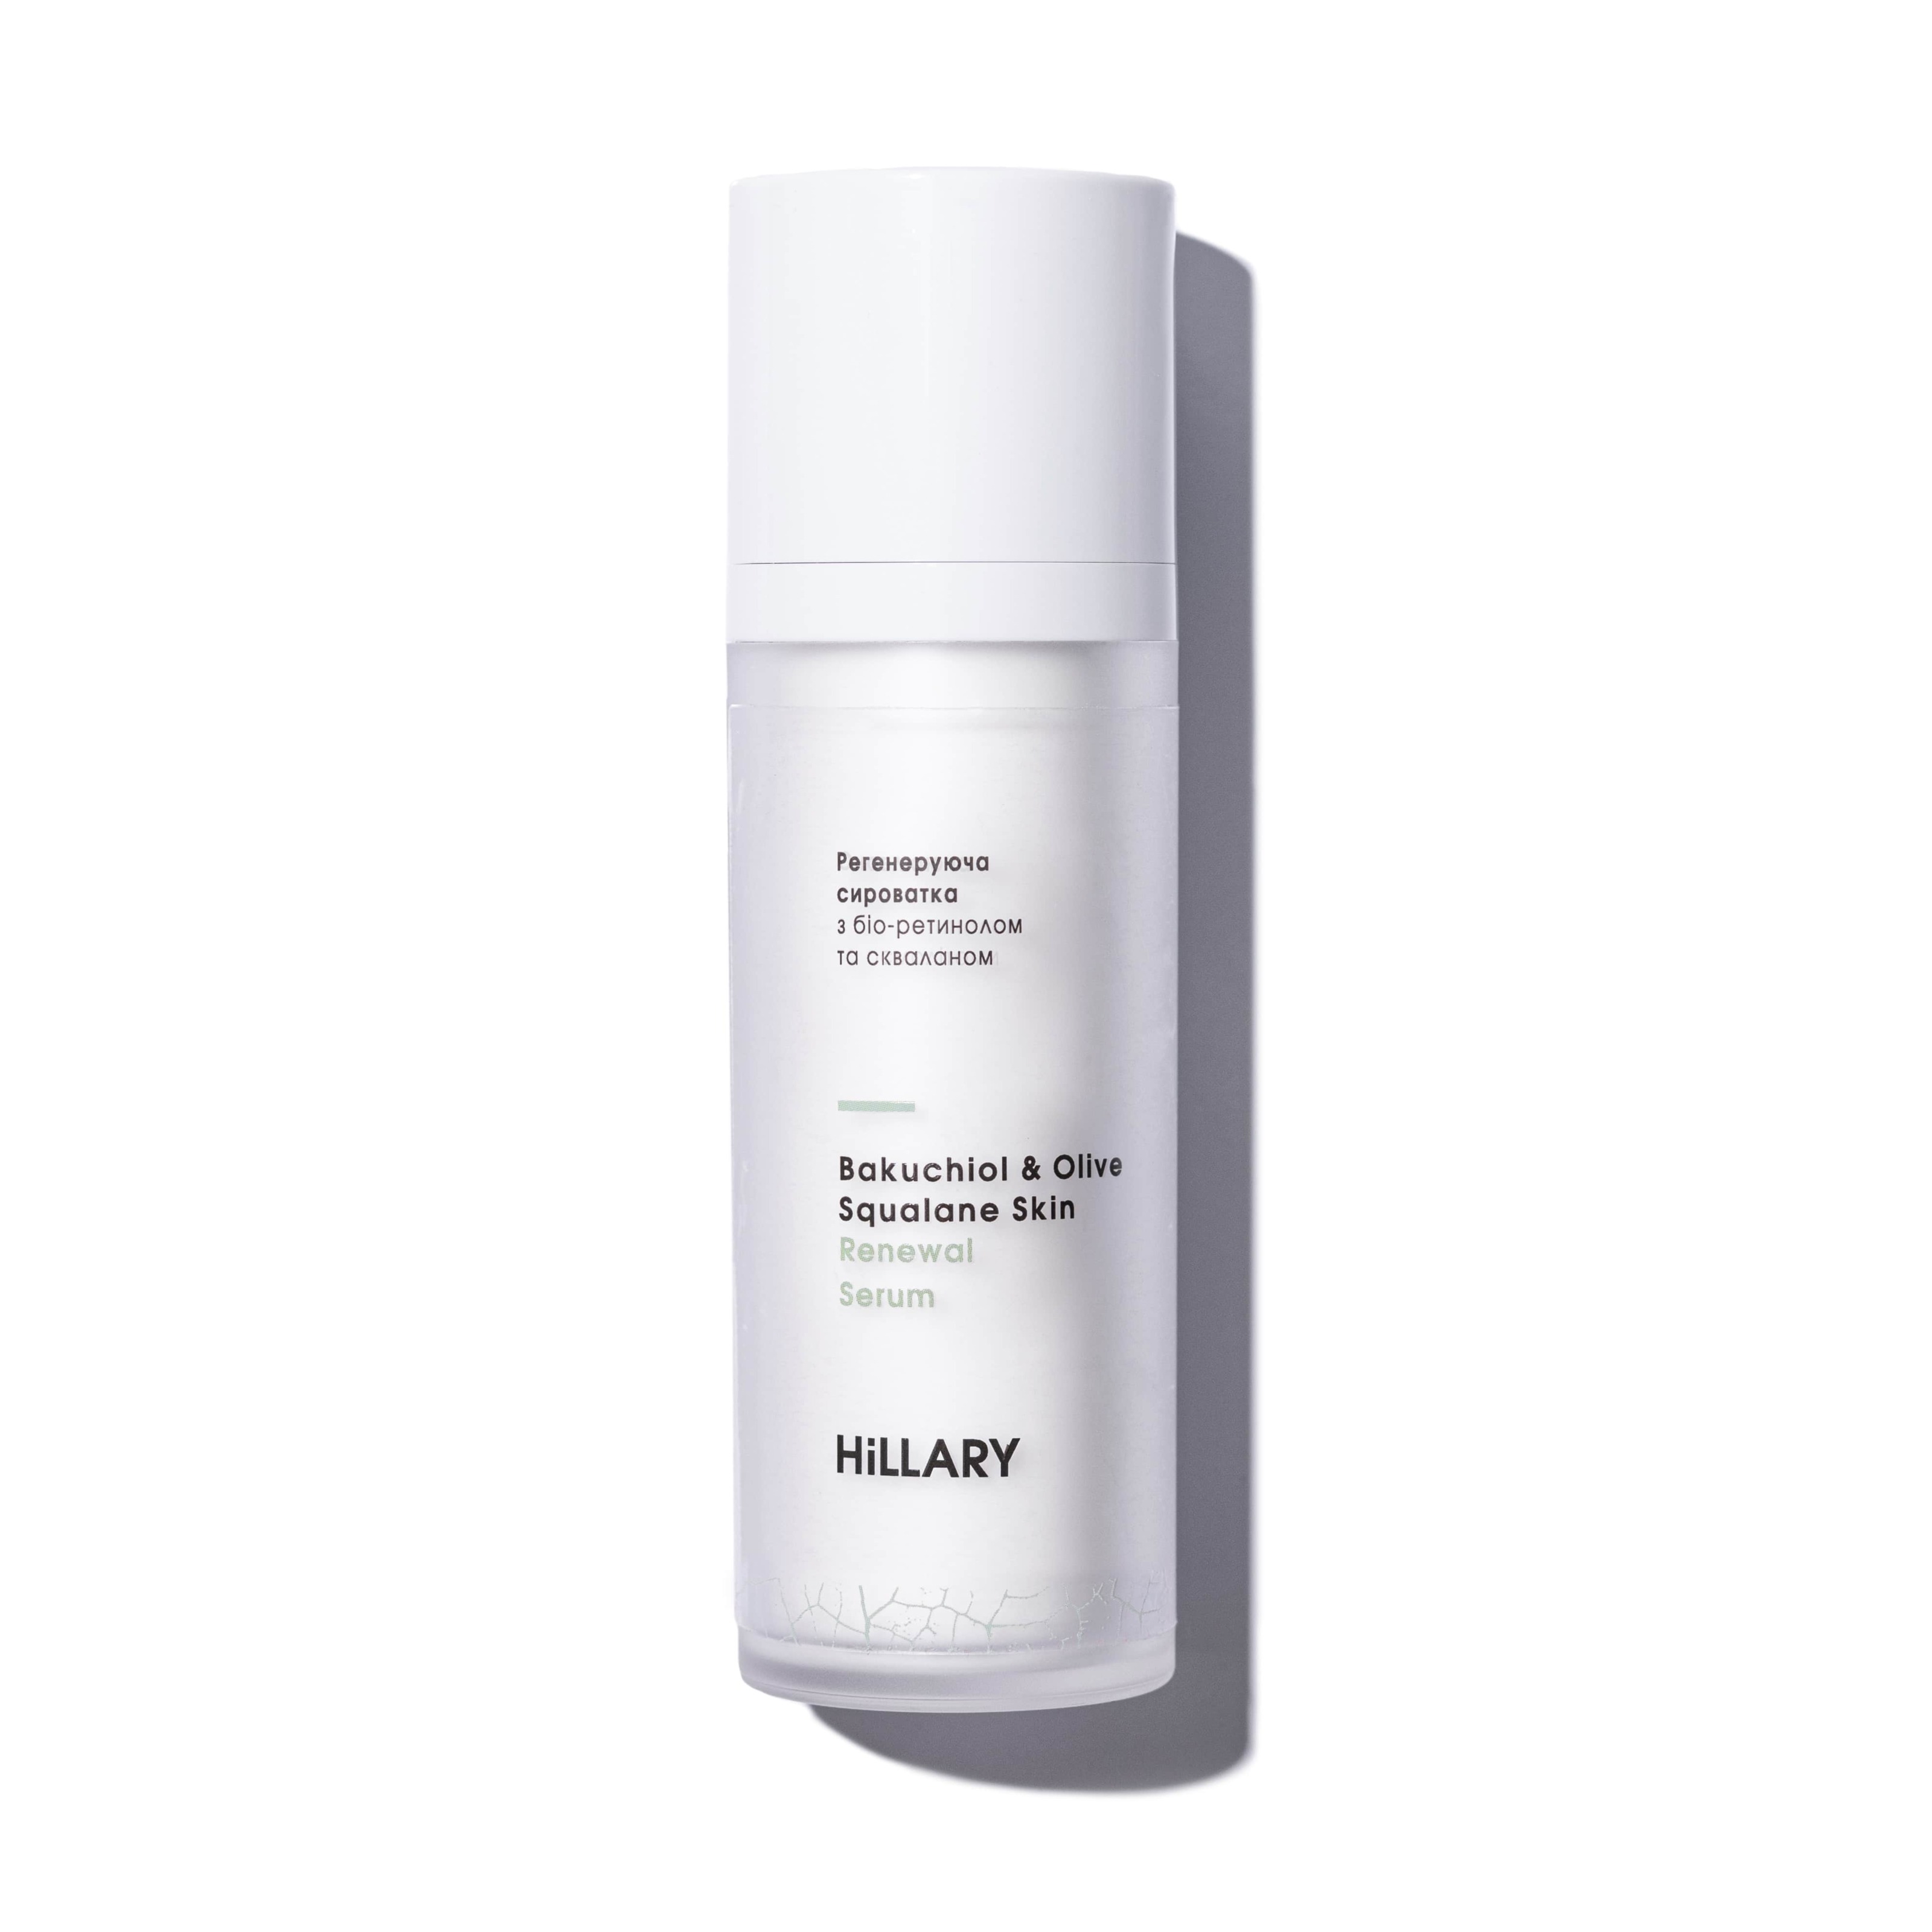 Акция на Регенеруюча сироватка з біо-ретинолом та скваланом Hillary Bakuchiol & Olive Squalane Skin Renewal Serum, 30 мл от Hillary-shop UA